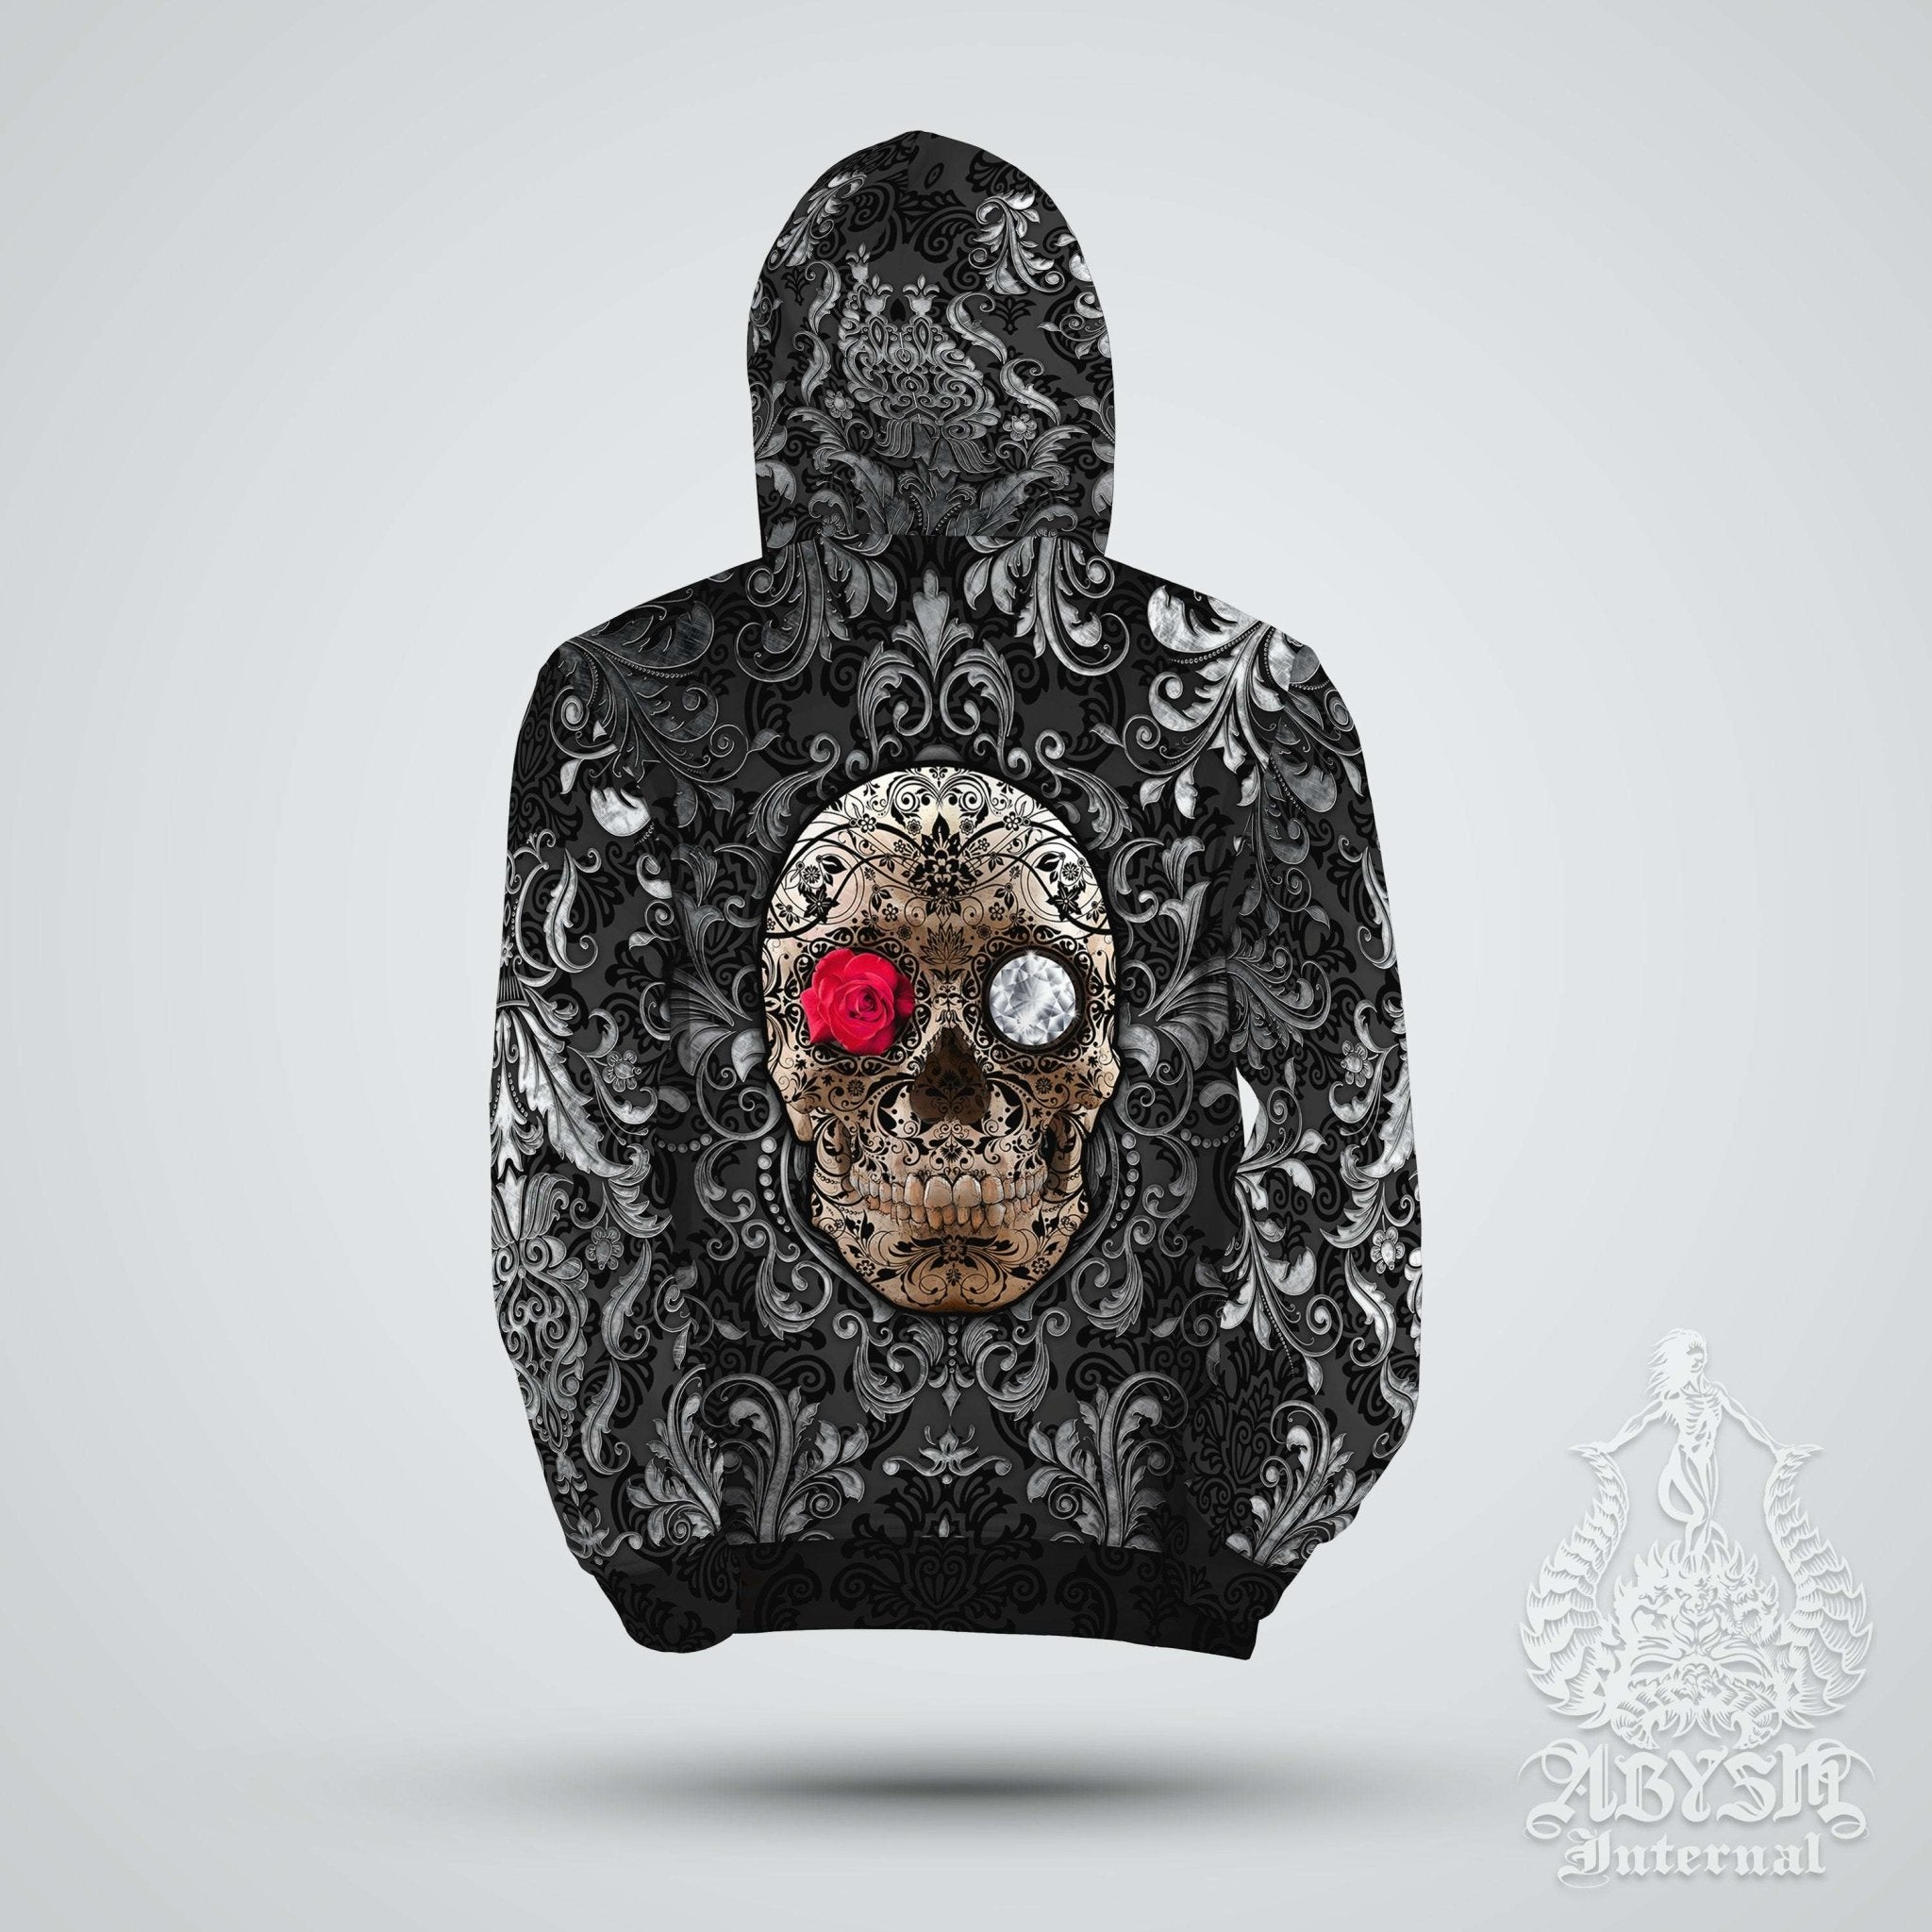 Sugar Skull Hoodie, Gothic Streetwear, Goth Dia de los Muertos, Alternative Clothing, Unisex - Day of the Dead - Abysm Internal